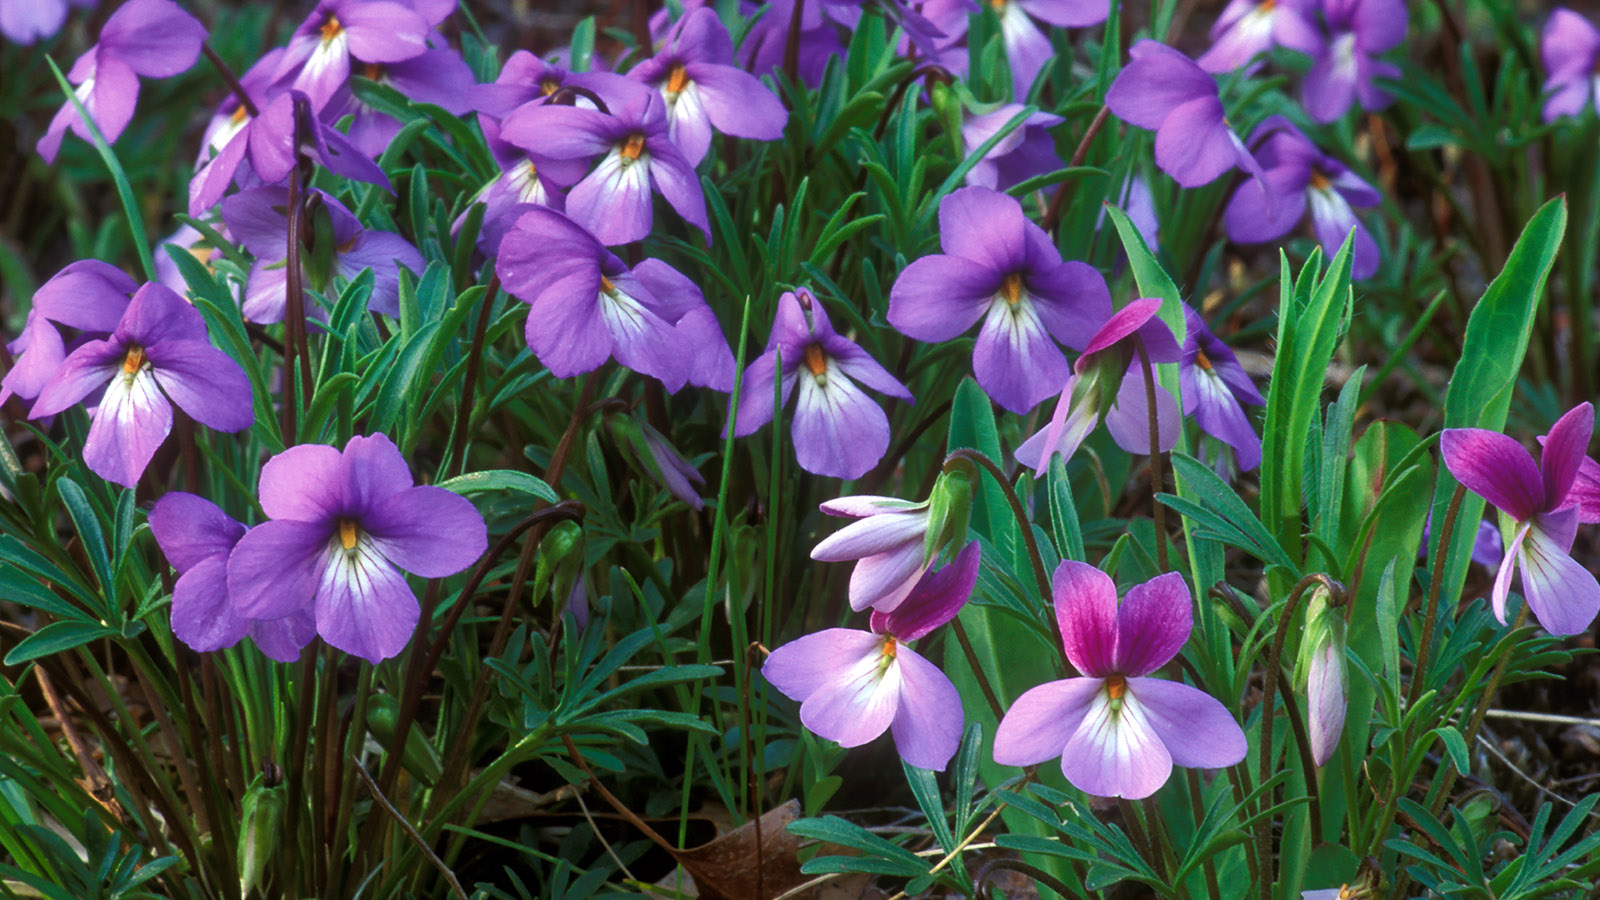 Birdfoot violets (Robert McCaw).